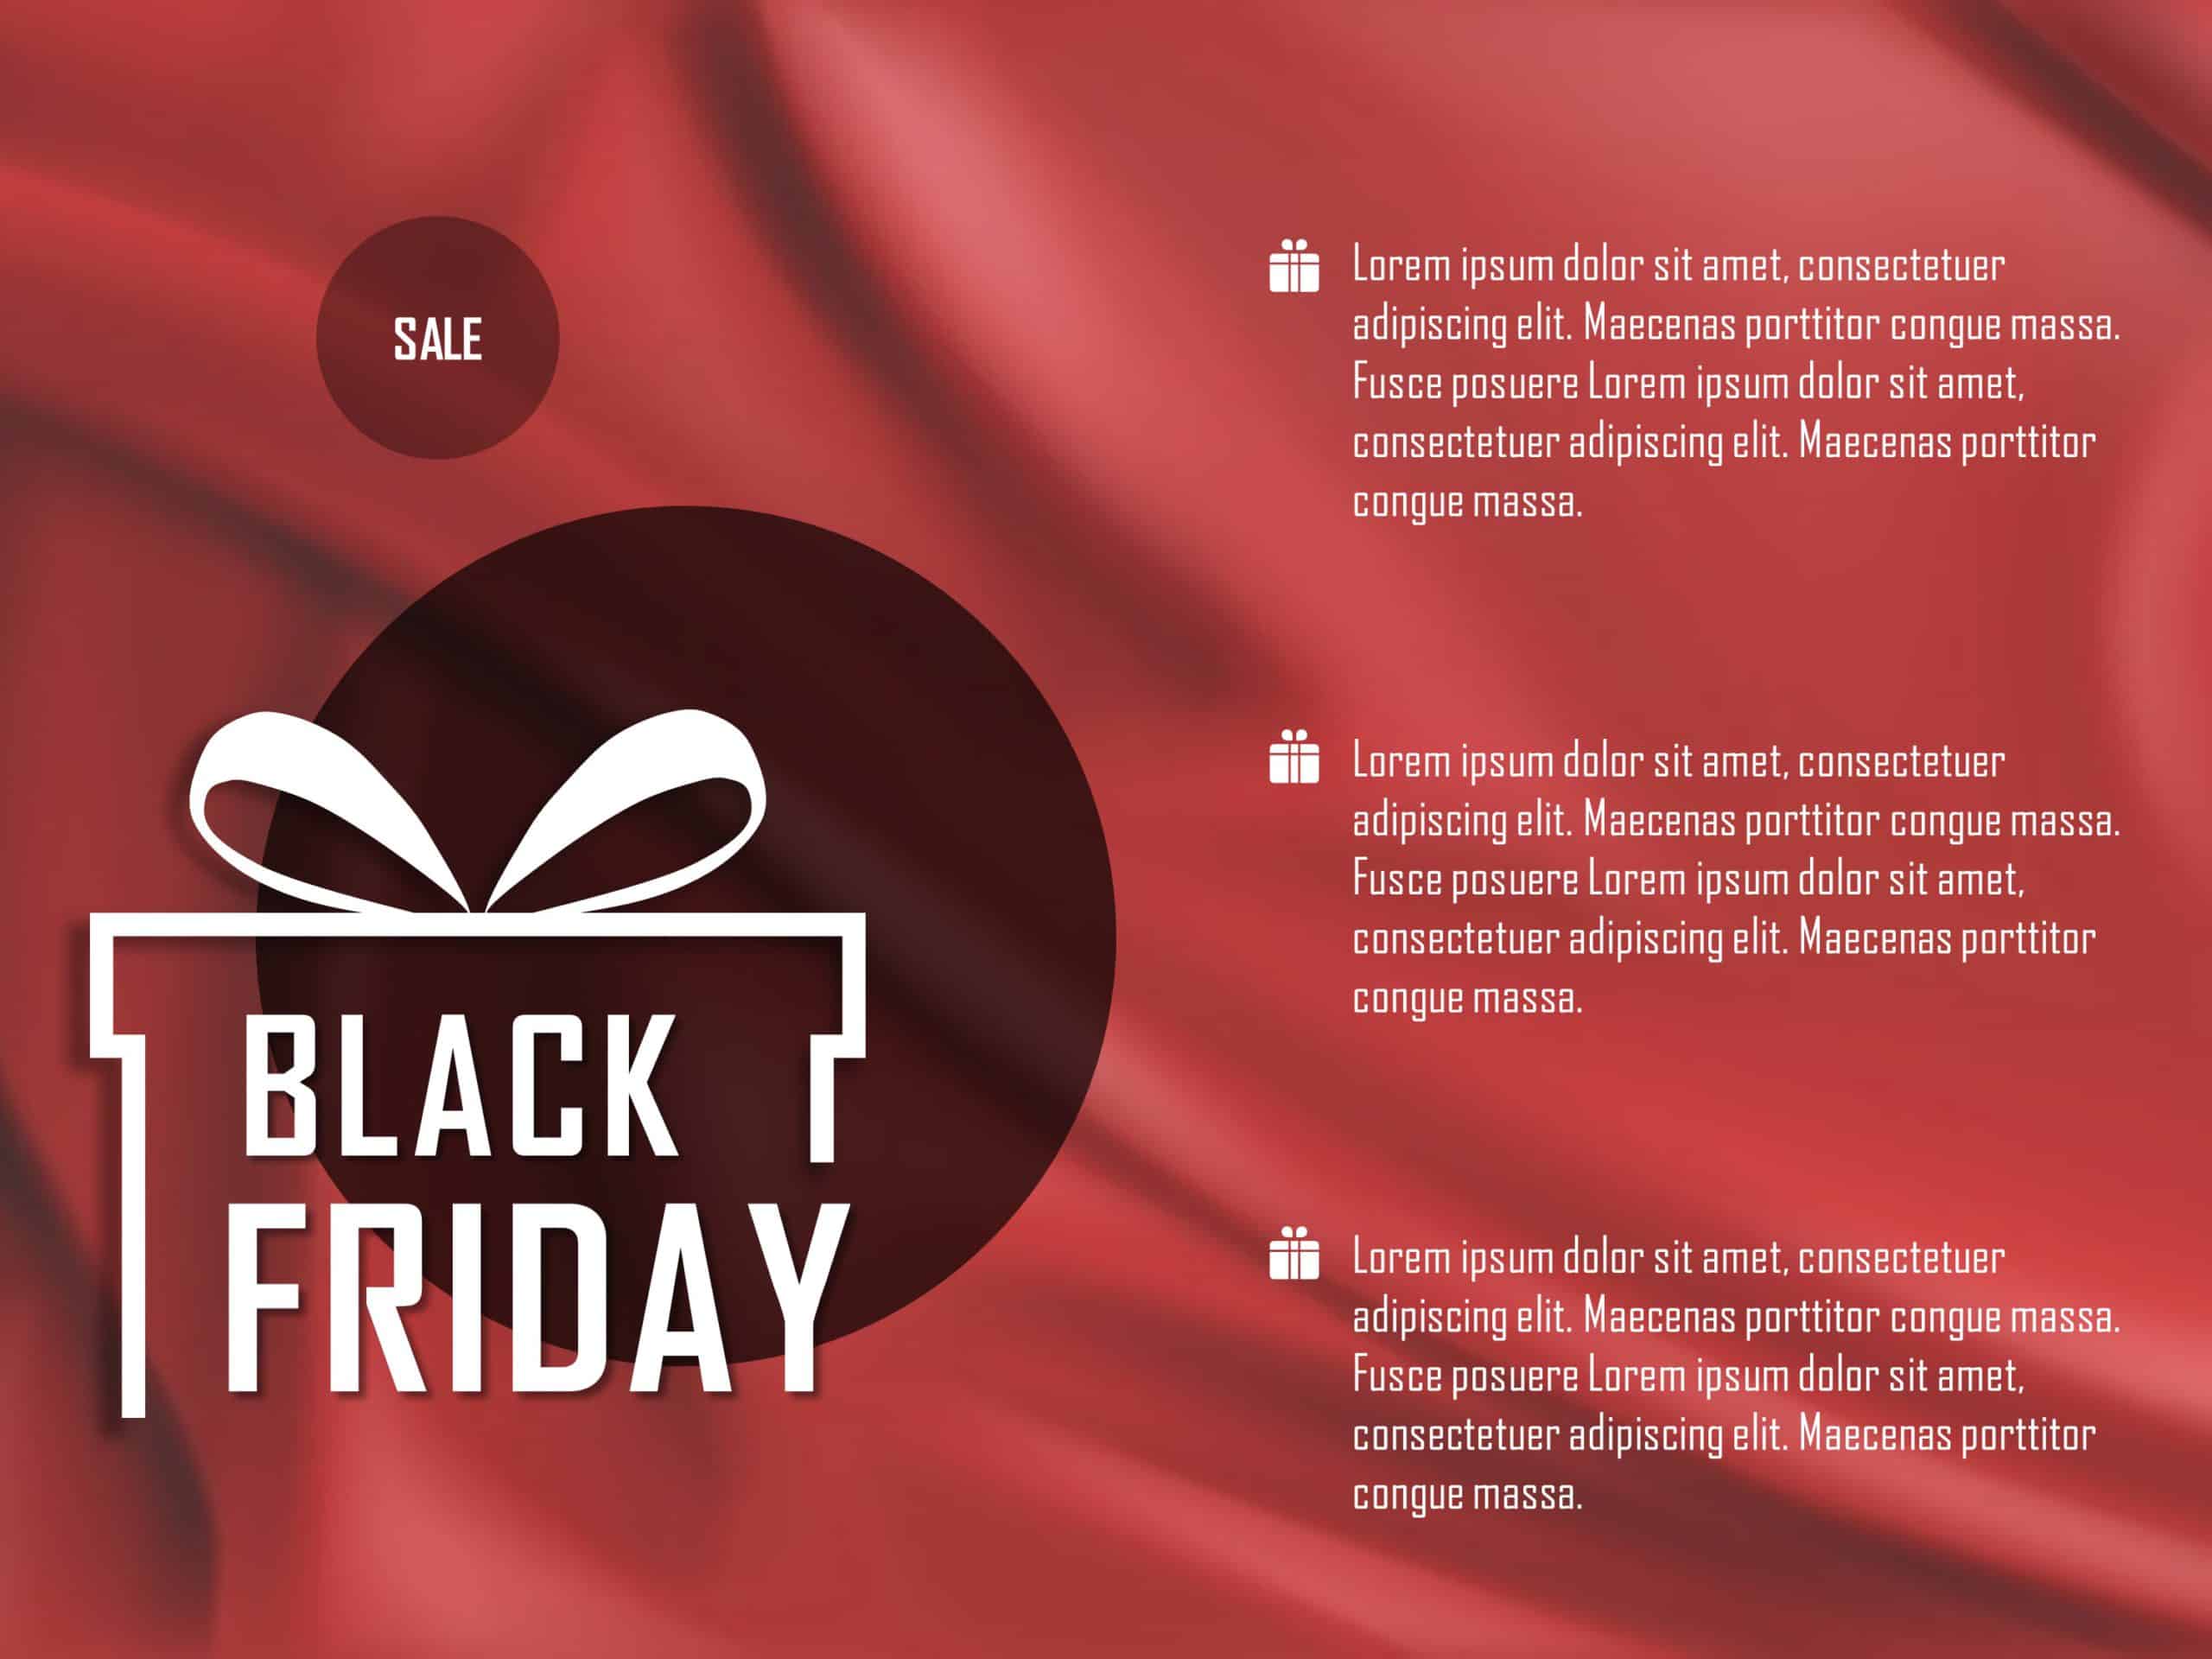 Black Friday Deals PowerPoint Template